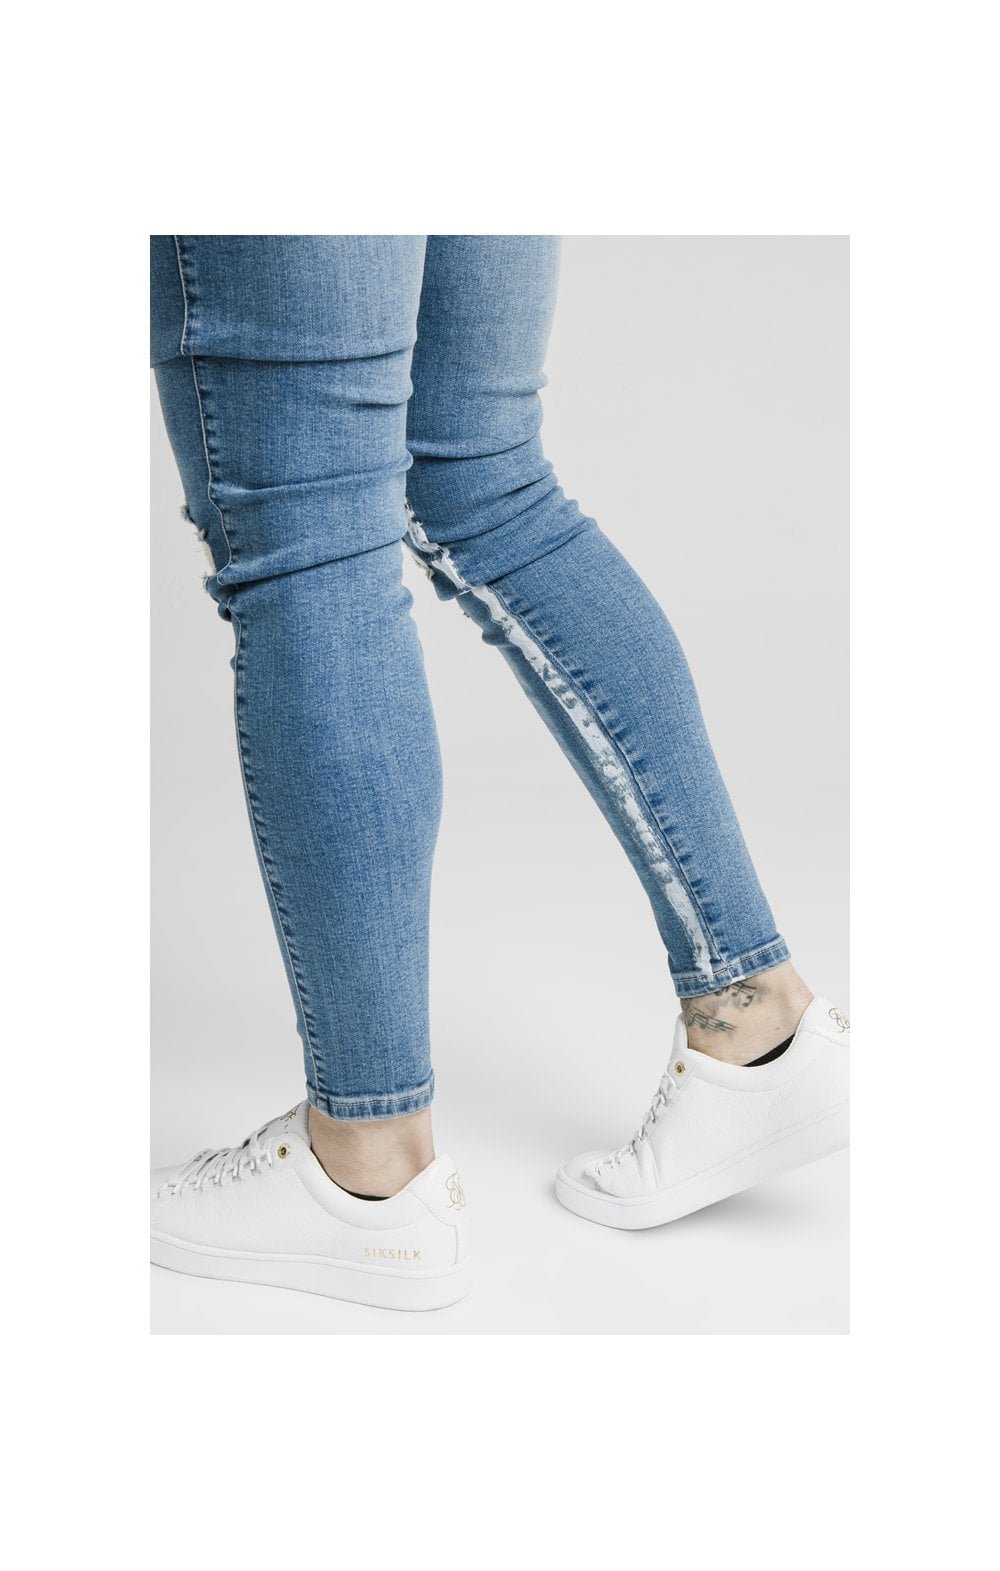 SikSilk Skinny Distressed Paint Stripe Jeans - Midstone & White (1)